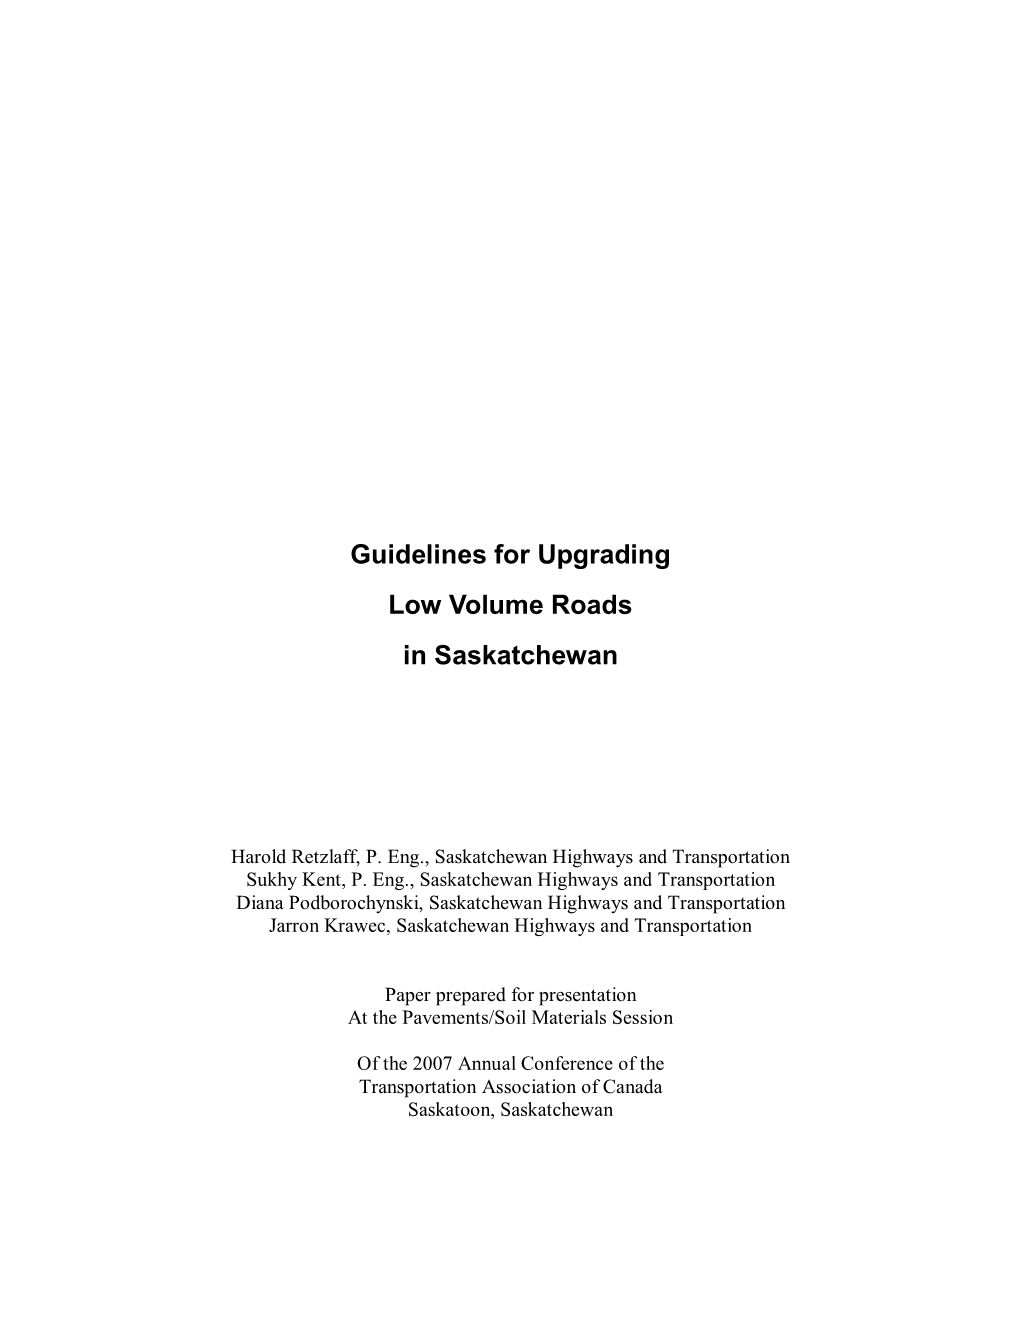 Guidelines for Upgrading Low Volume Roads in Saskatchewan